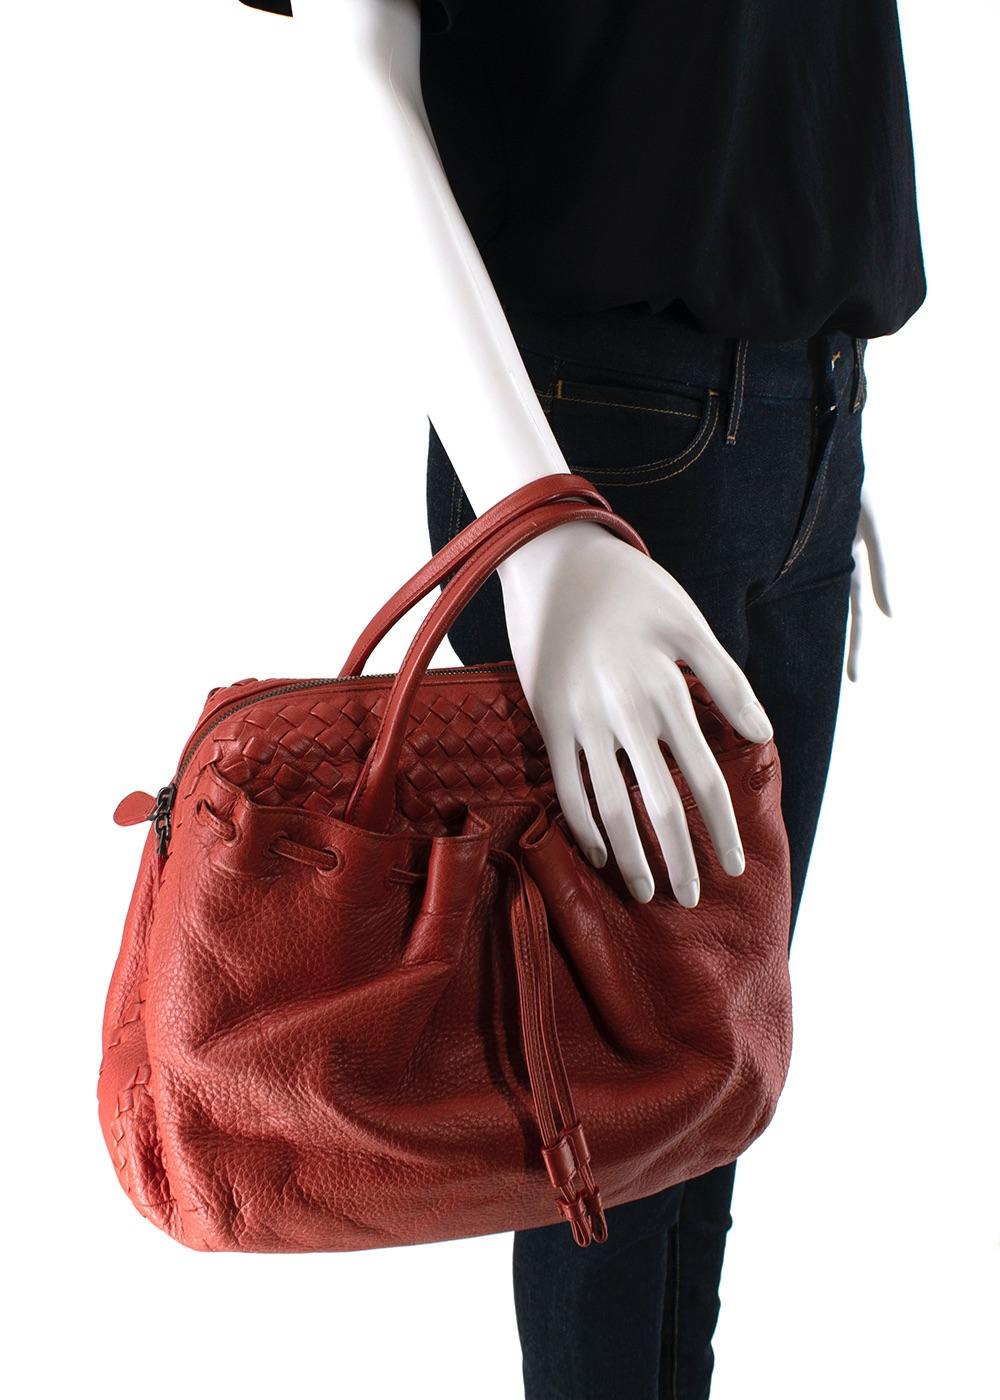 Bottega Veneta Red Leather Intrecciato Bag In Excellent Condition For Sale In London, GB